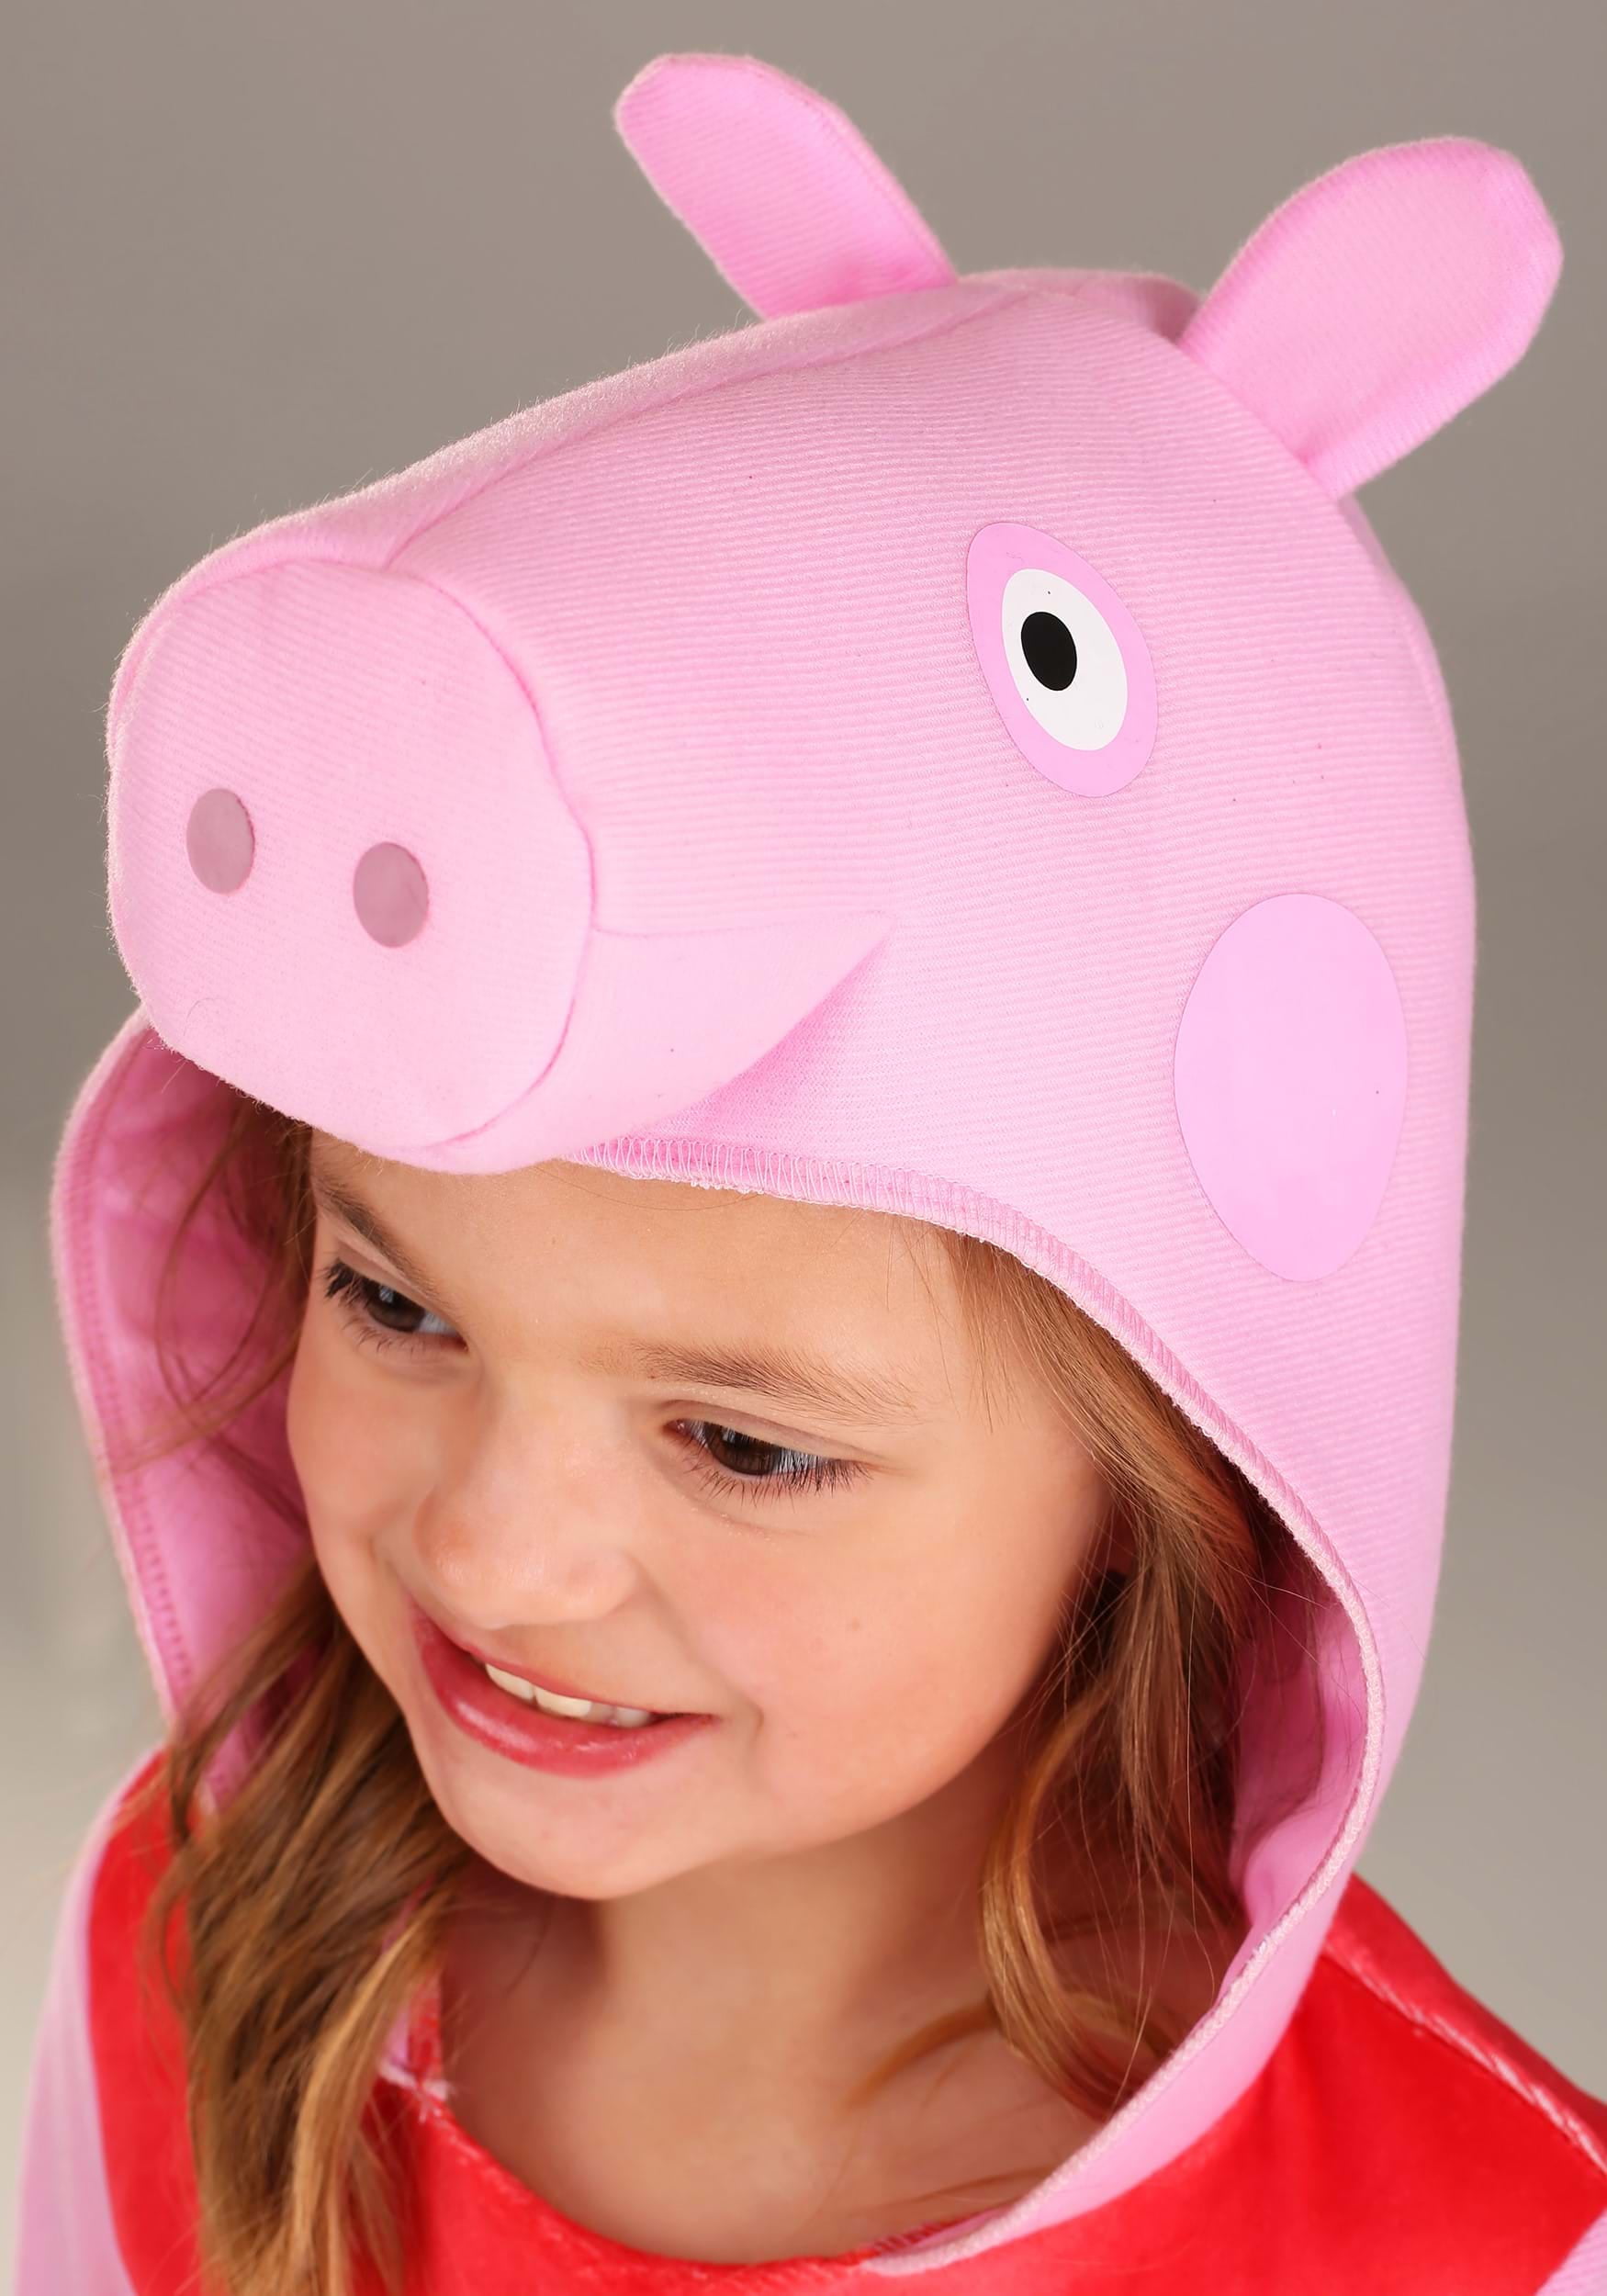 Peppa Pig Long Sleeve Costume for Girls - Walmart.com